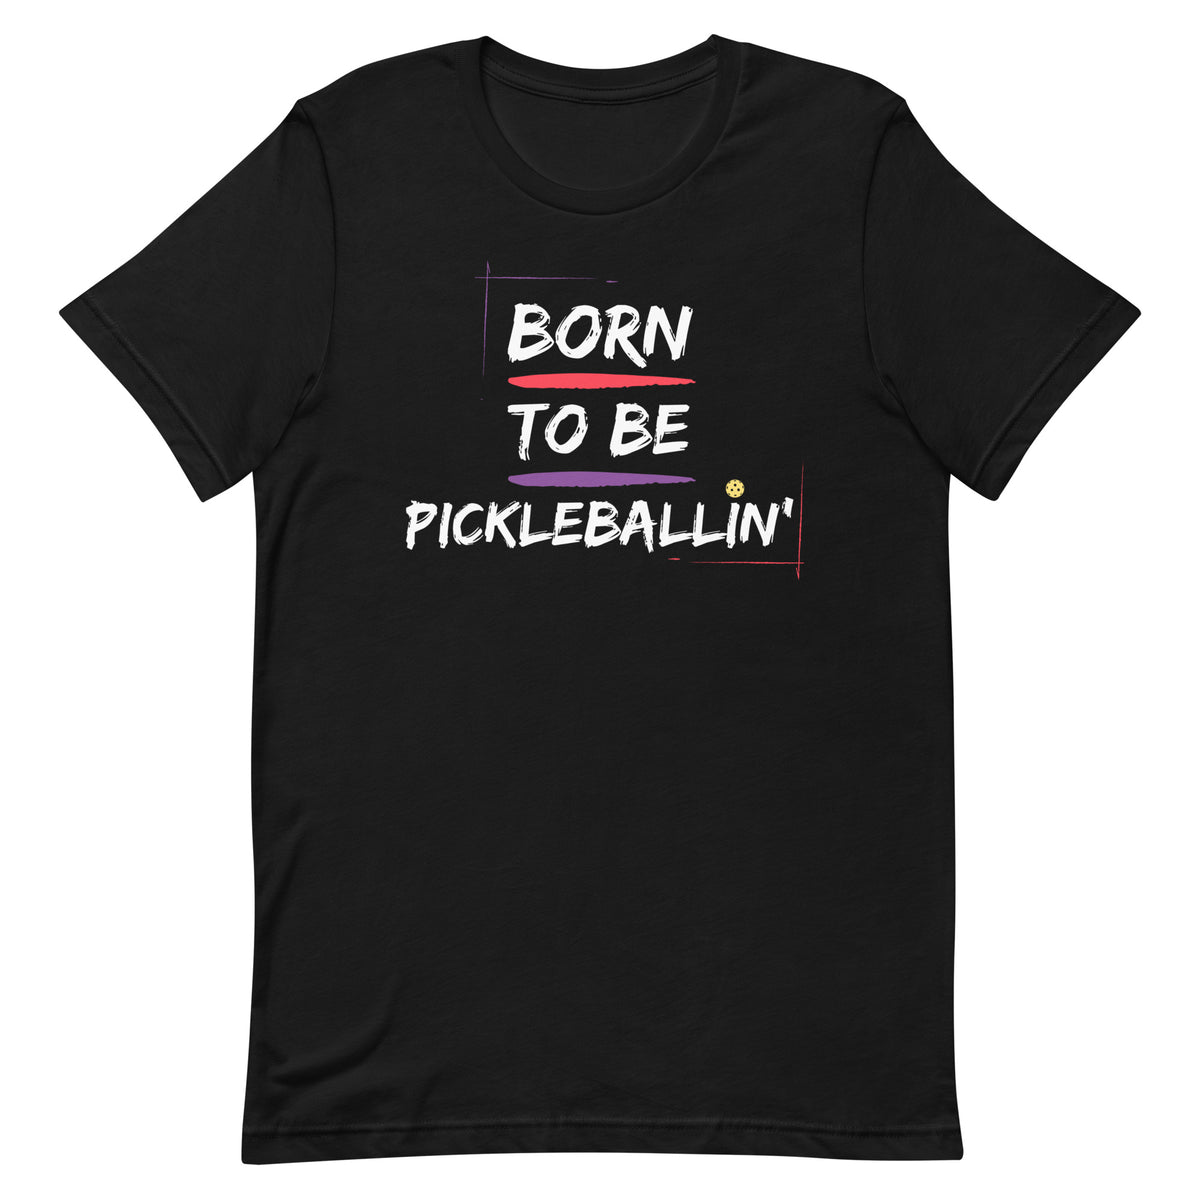 Pickleballin' T-shirt